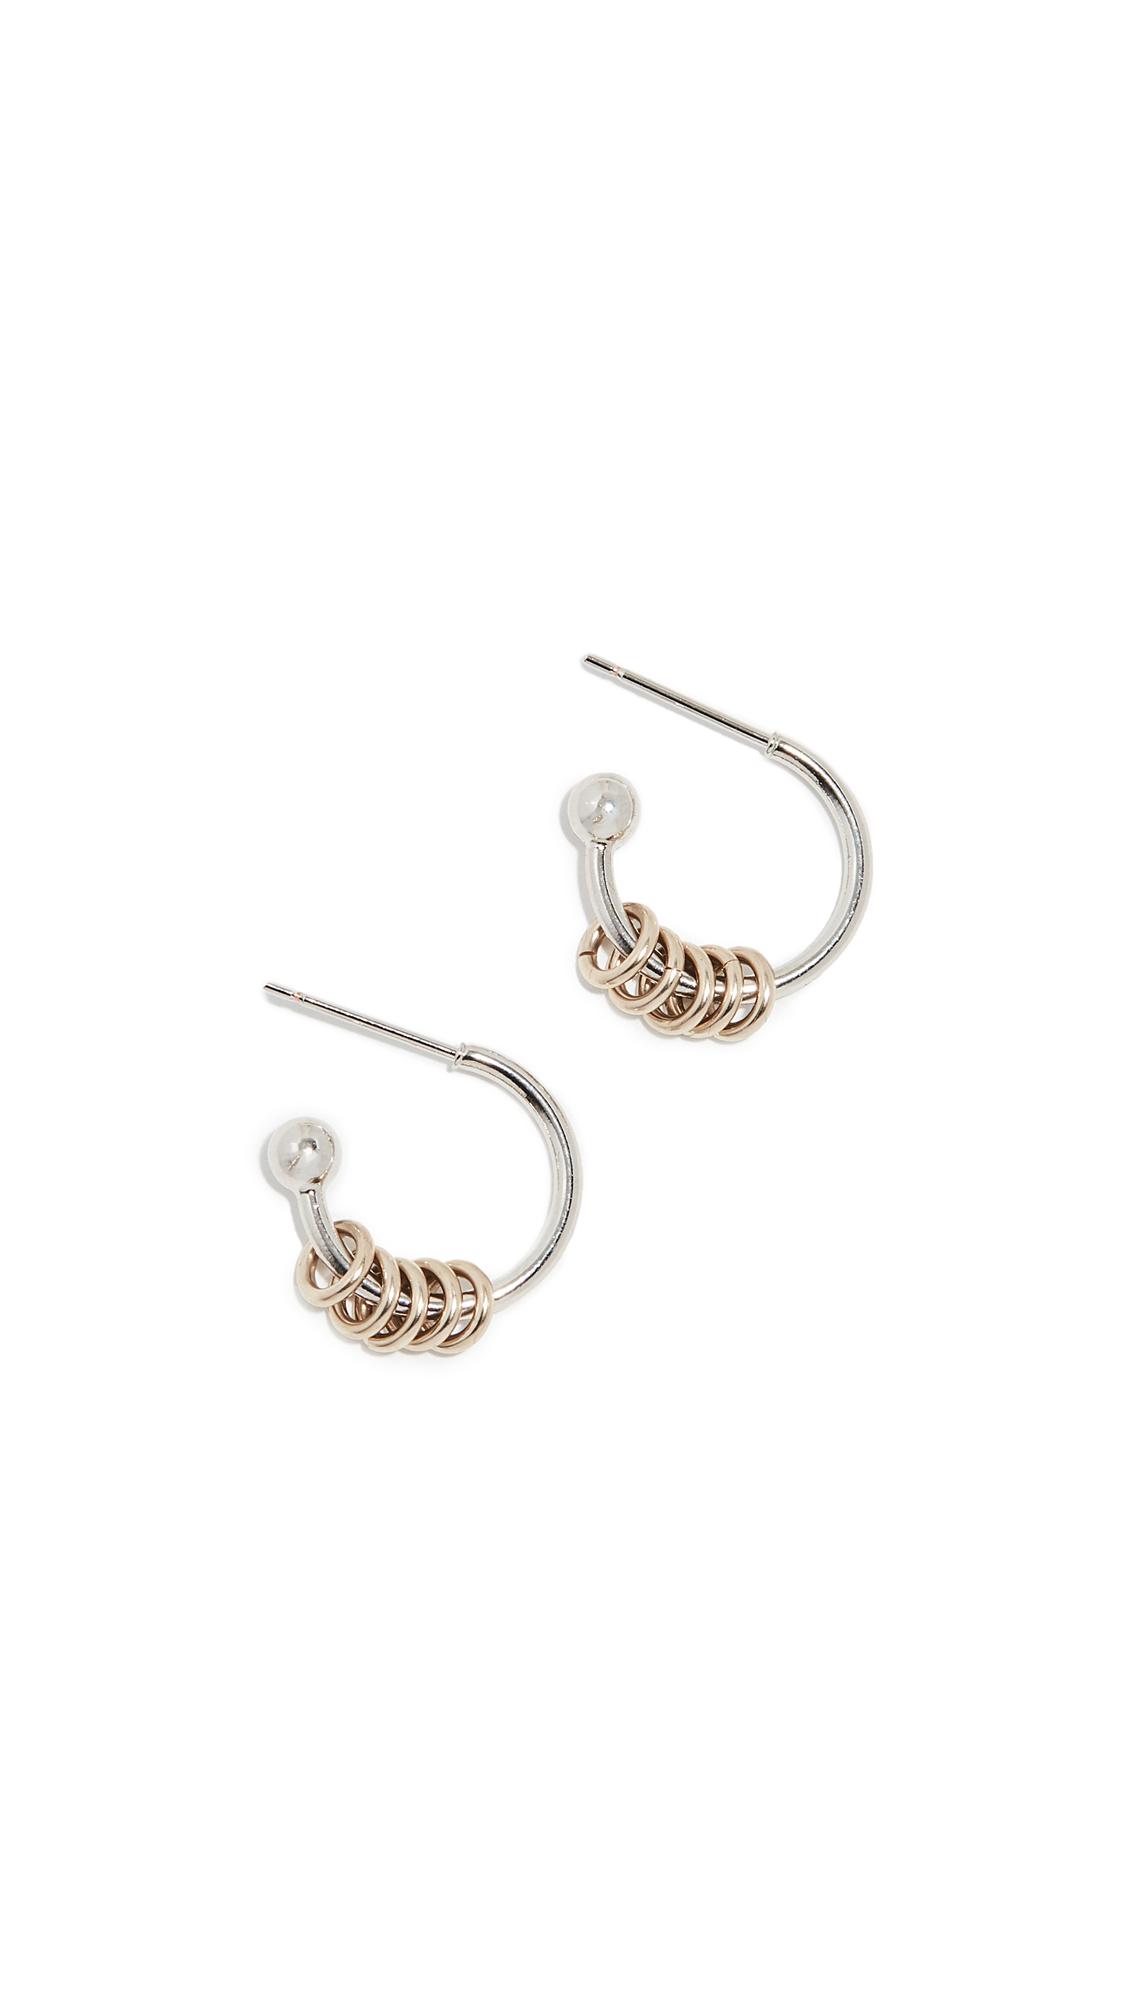 Justine Clenquet Mini Gloria Hoop Earrings in Gold/Silver (Metallic 